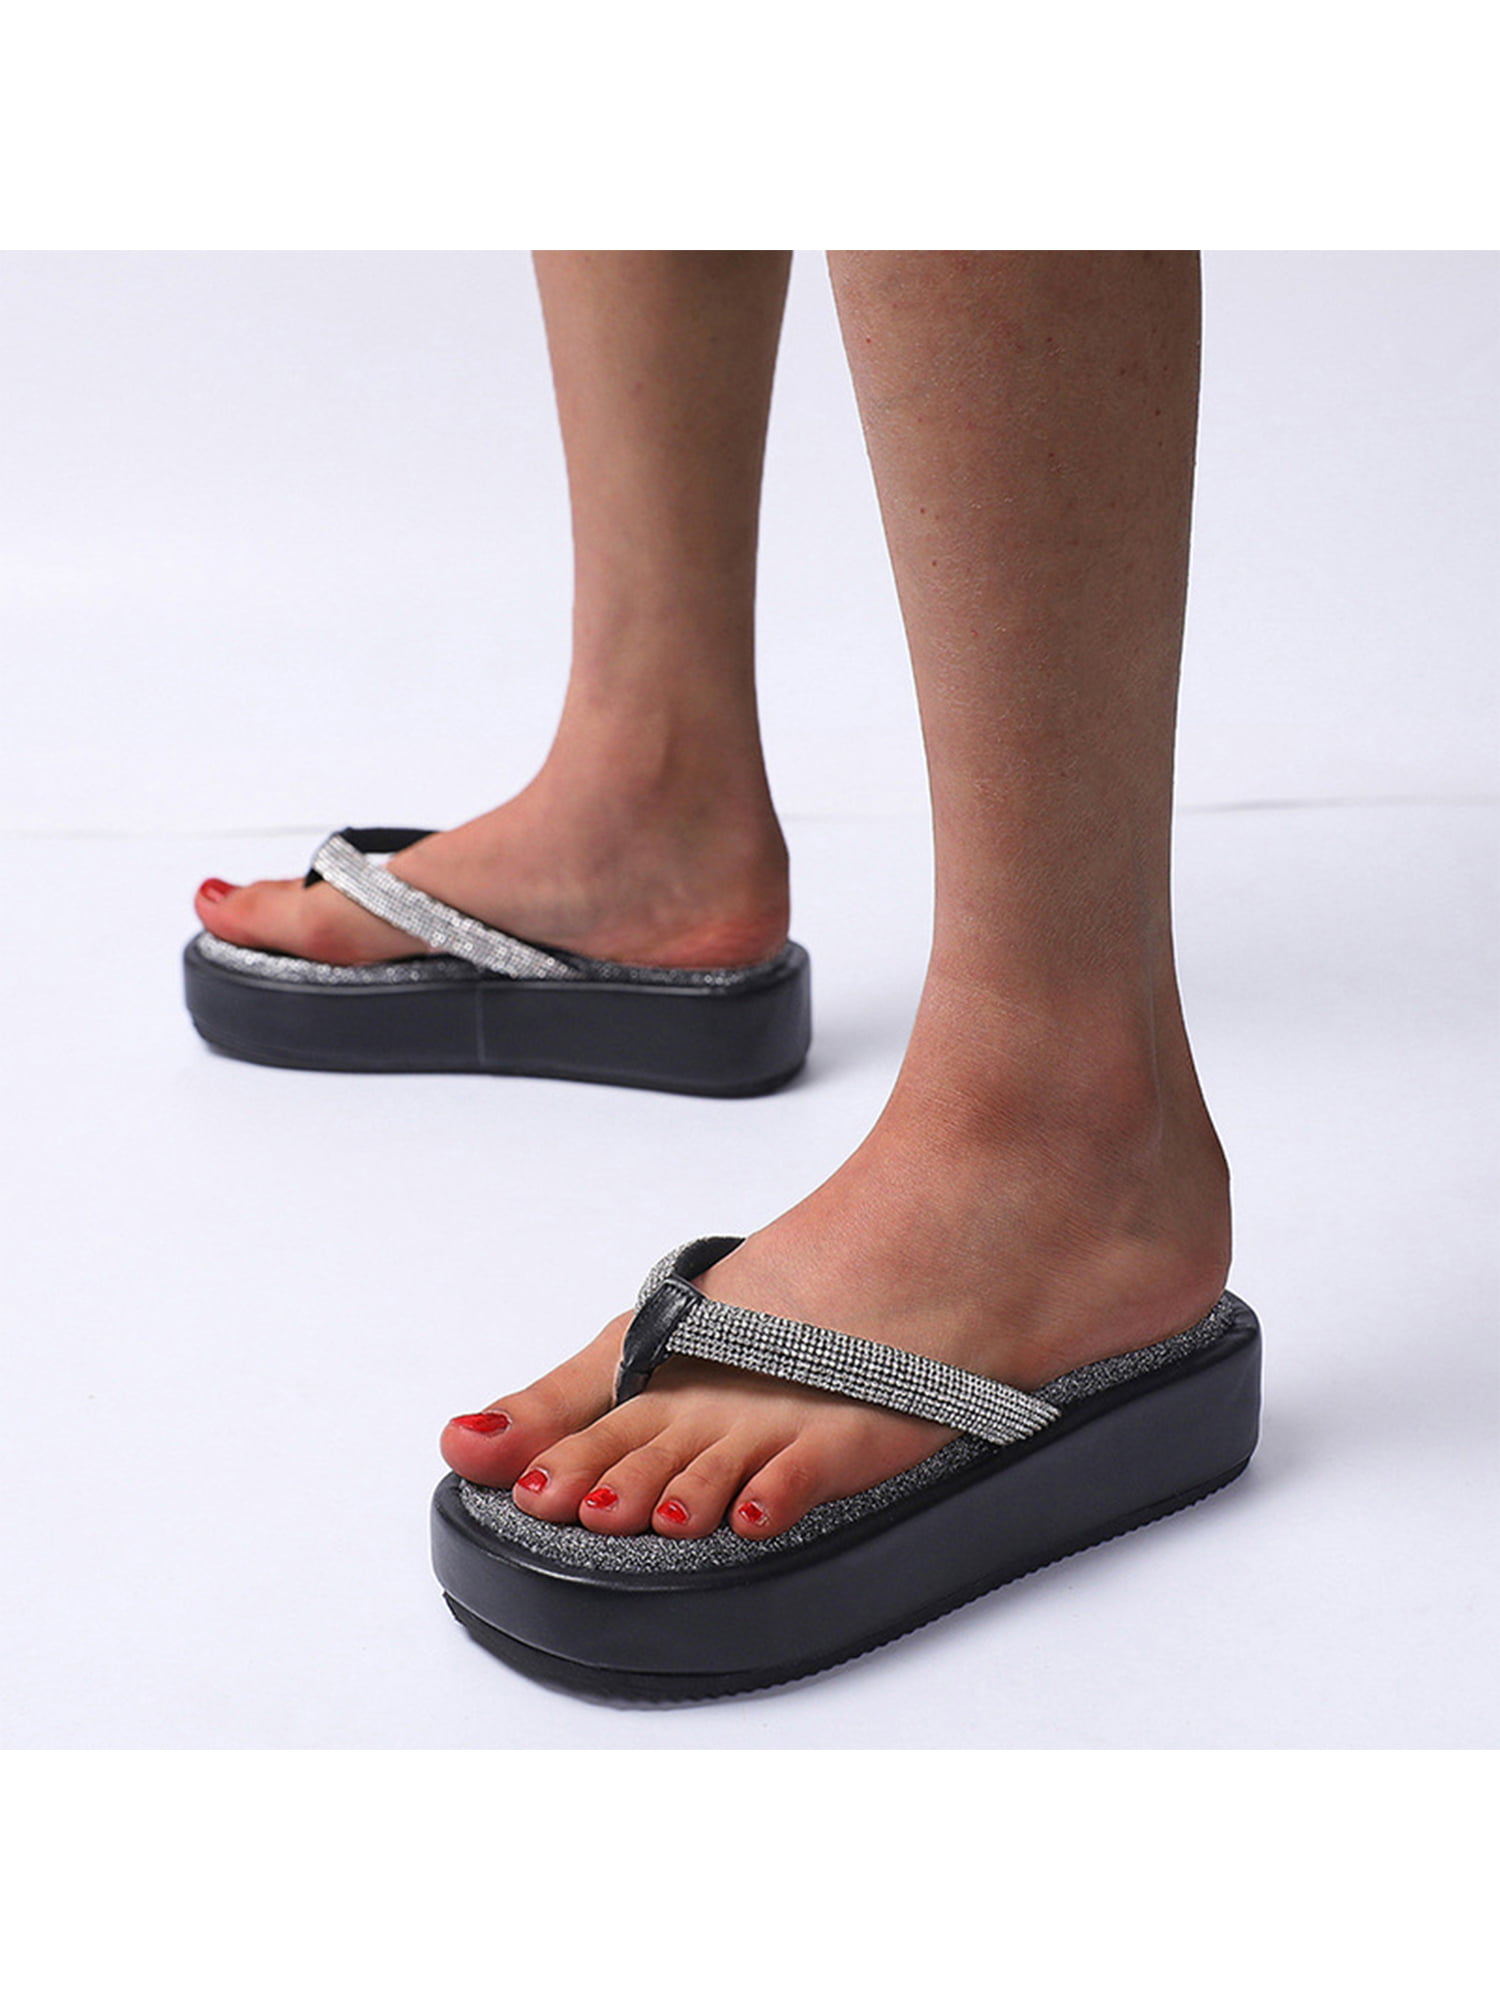 Women Rhinestone Flip-Flops Wedges Comfy Flats Sandal Shoes Platform Sandals Open Toe Creative Beach Travel Anti-Slipper Shoes for Ladies Girl Girlfriends